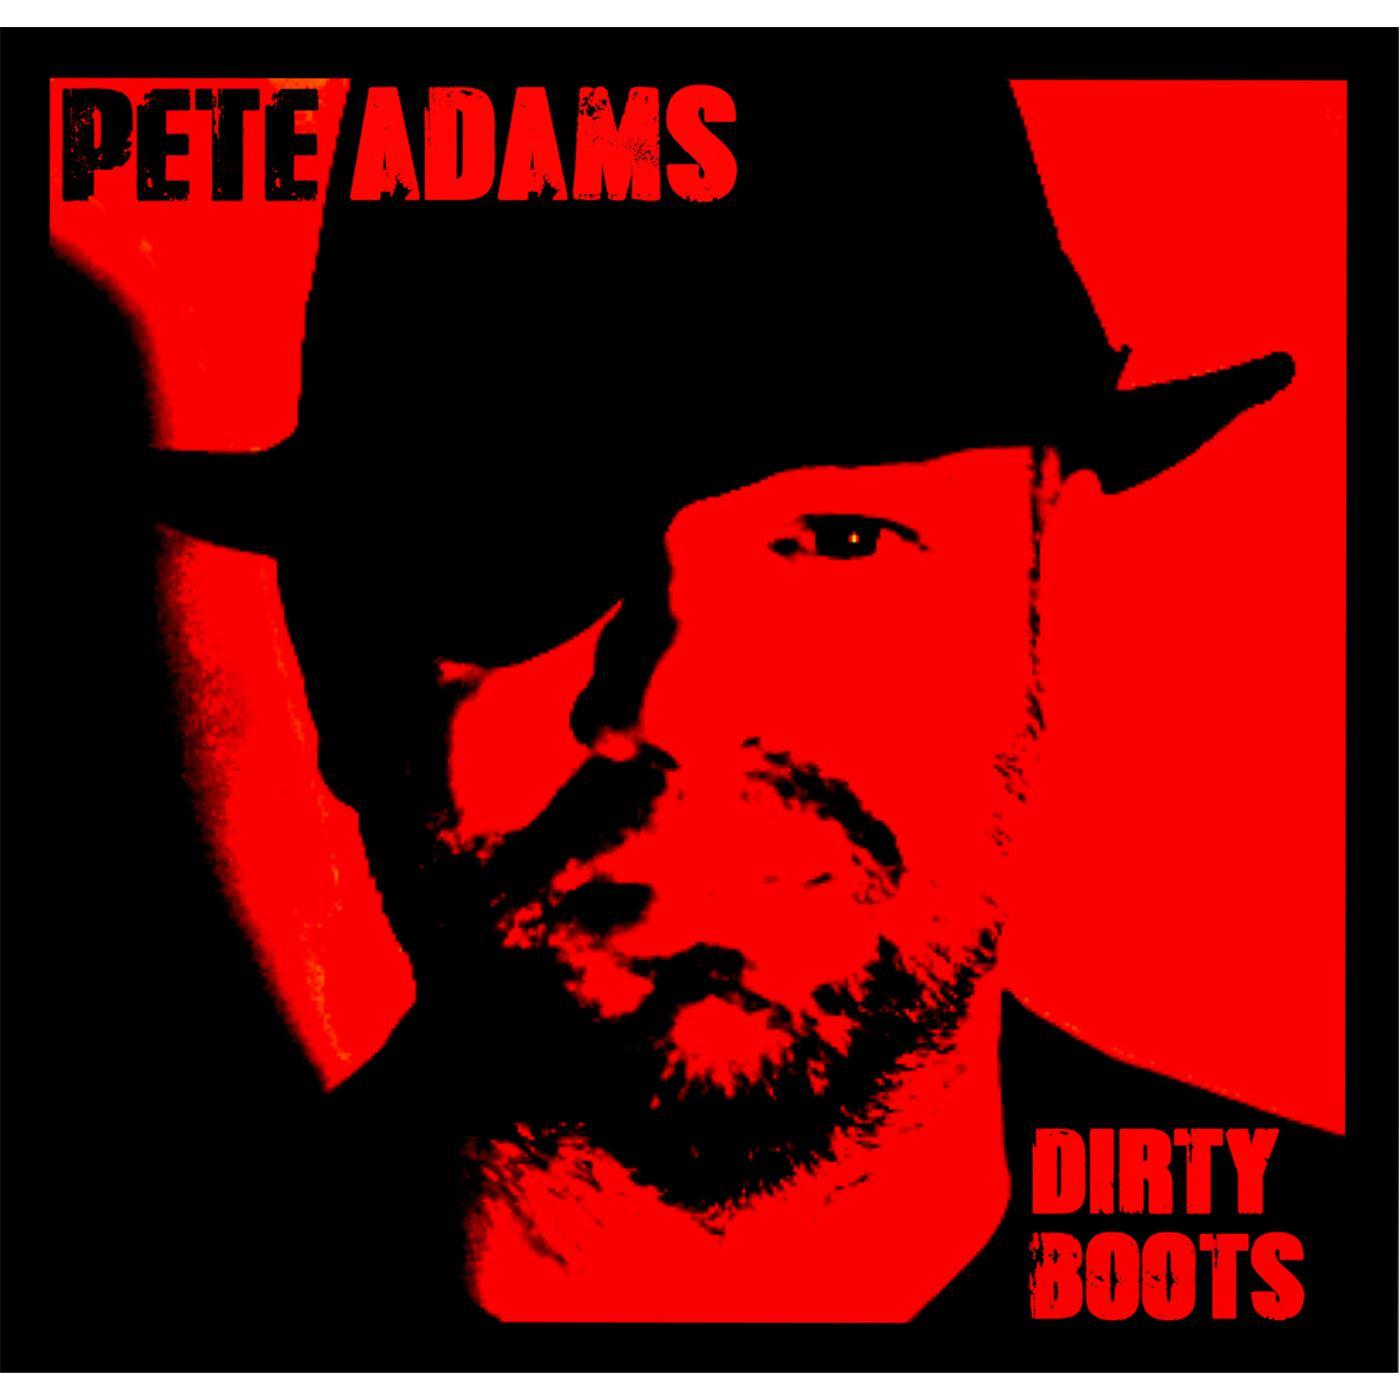 Pete Adams - Dirty Boots